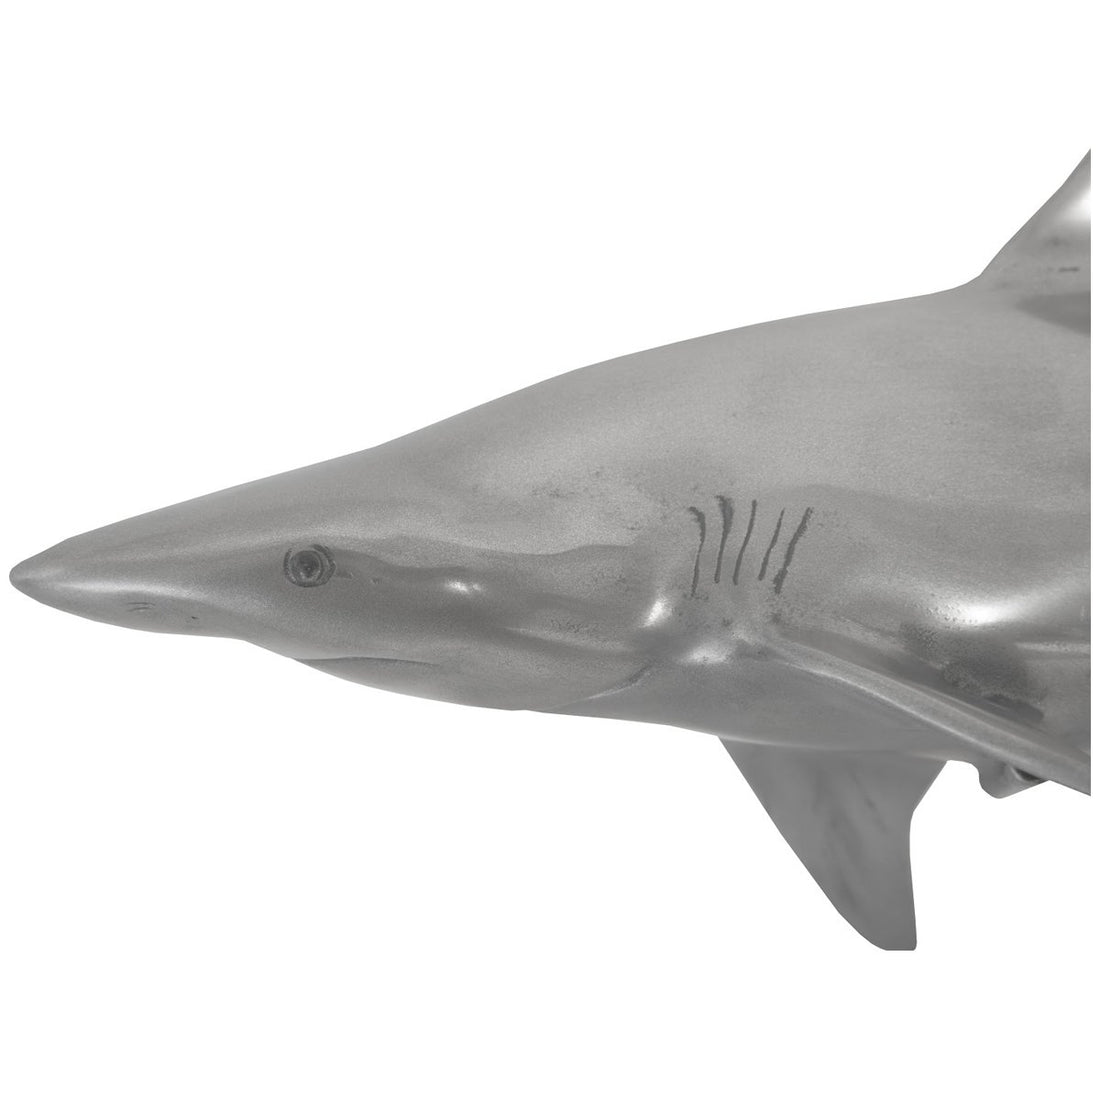 Phillips Collection Whaler Shark Fish Wall Sculpture